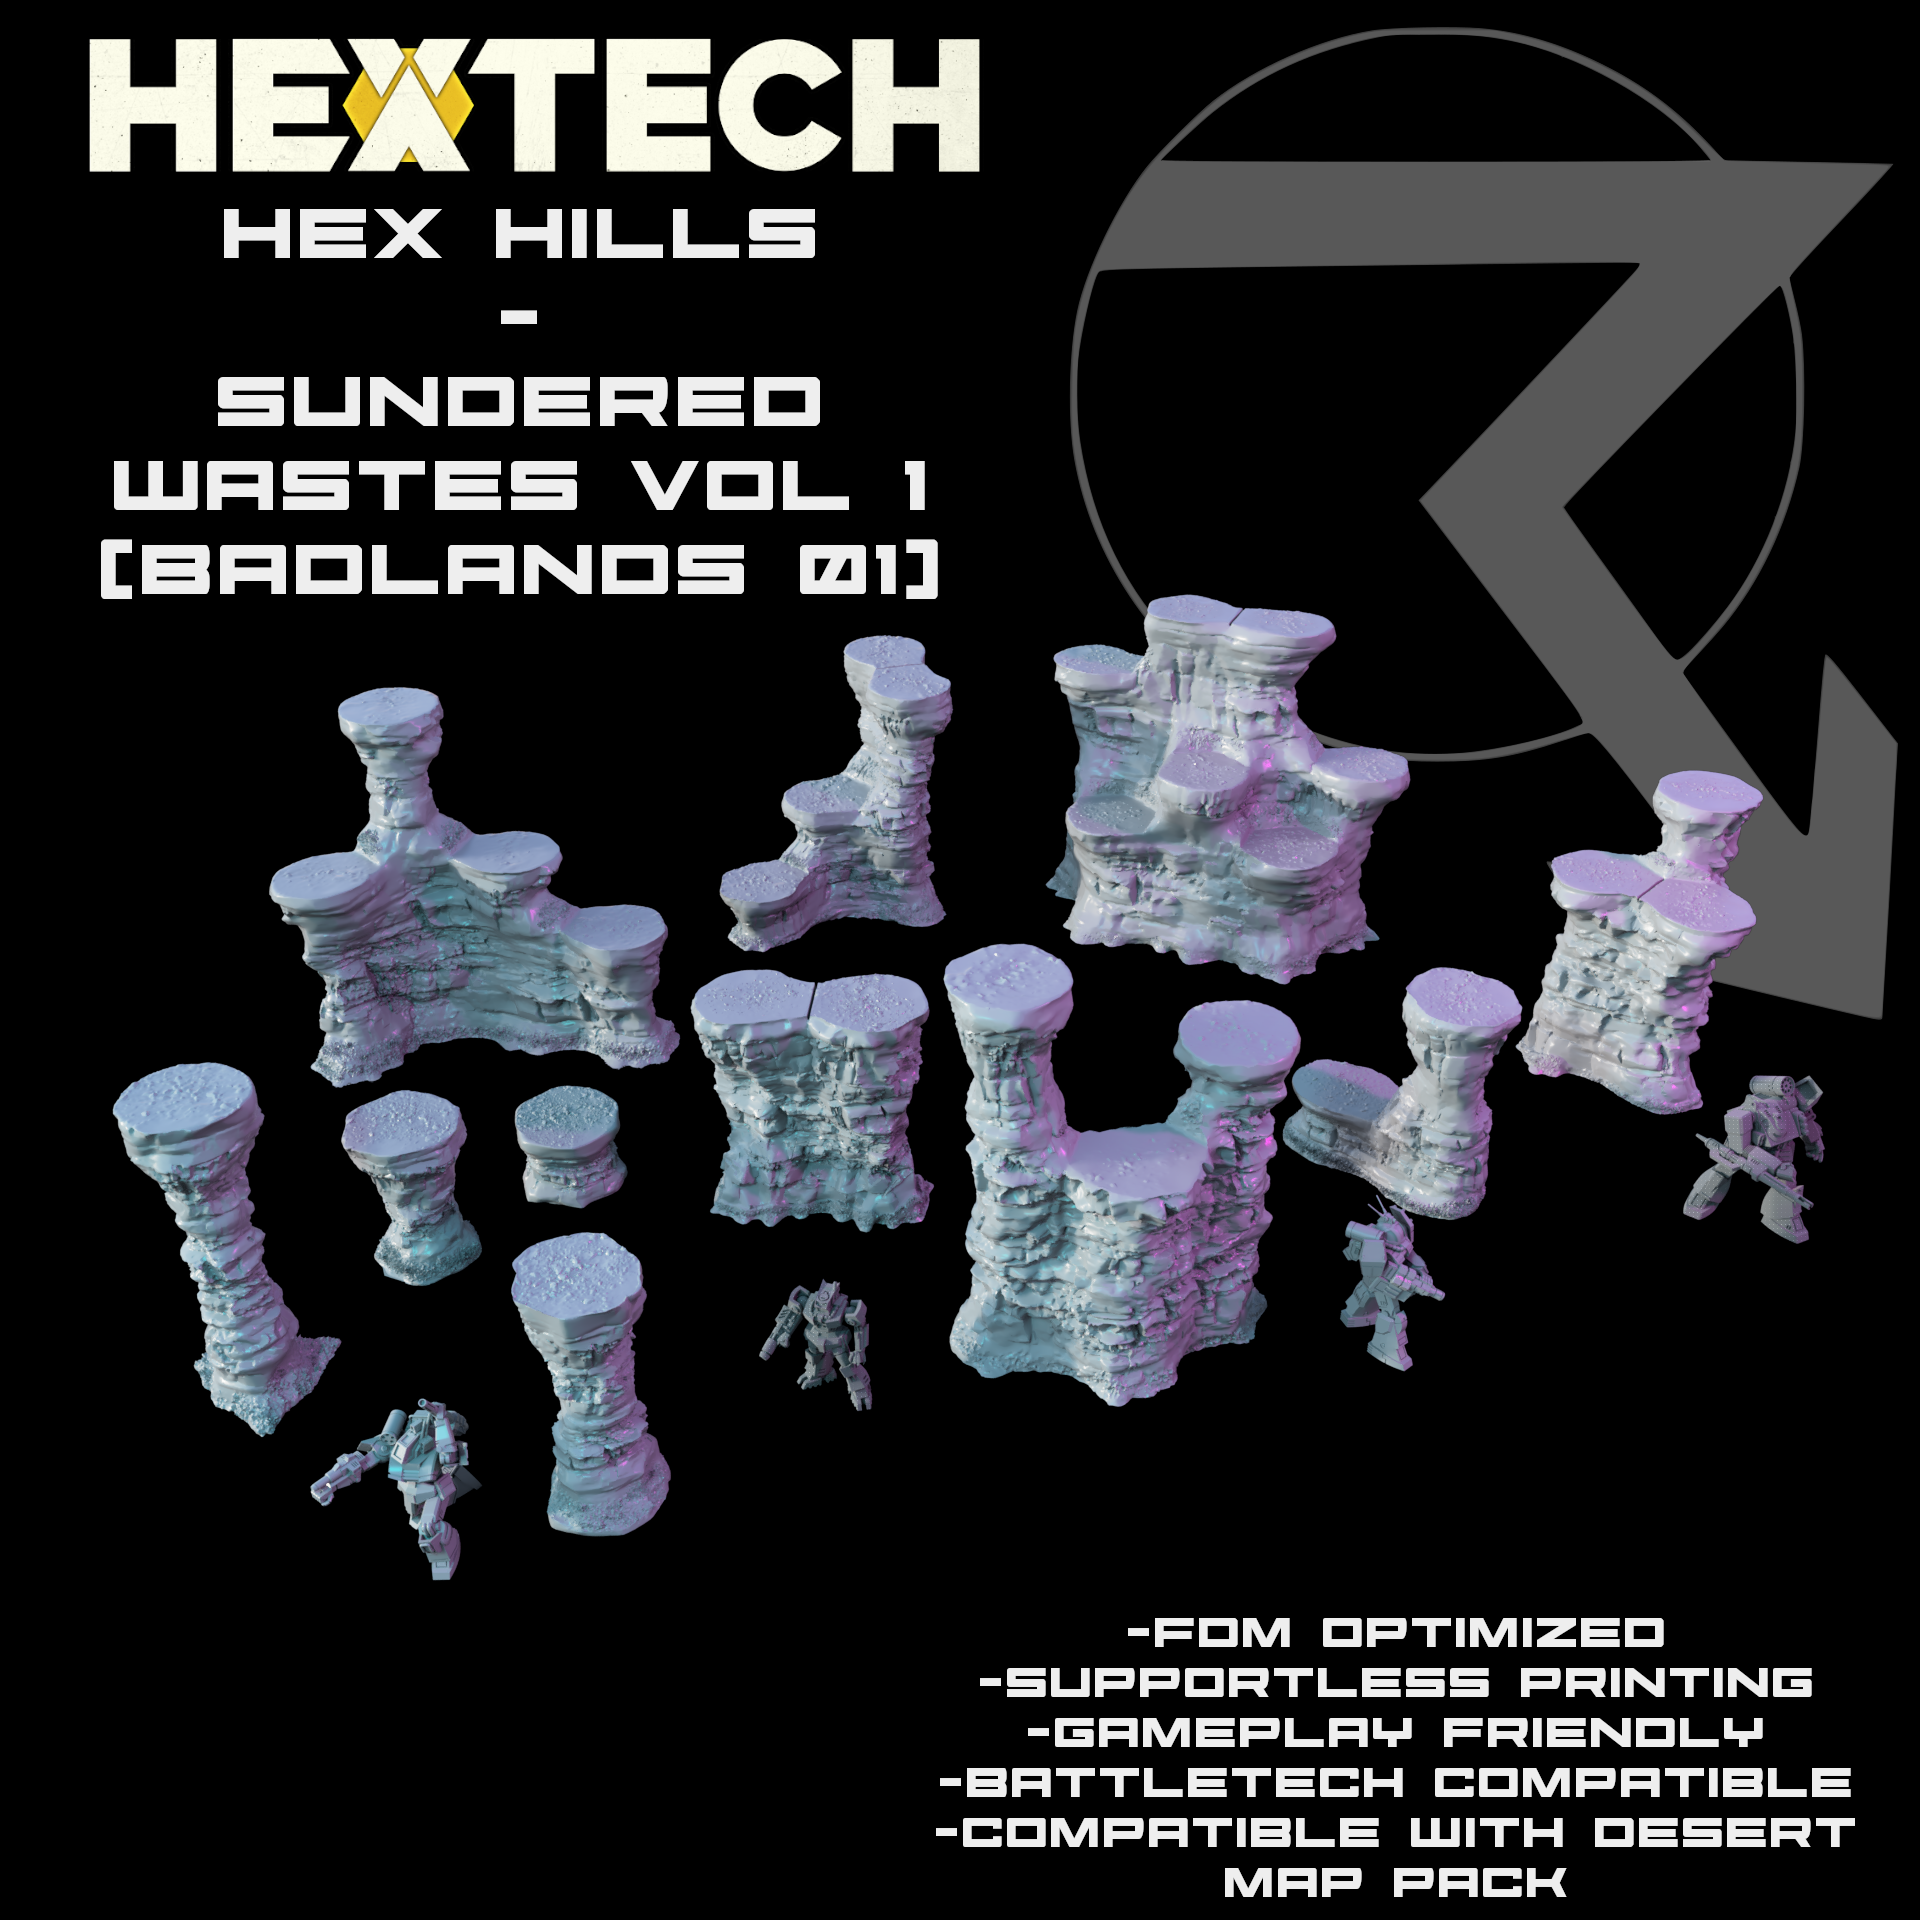 HEXTECH Sundered Wastes Vol 1 Bundle for Battletech